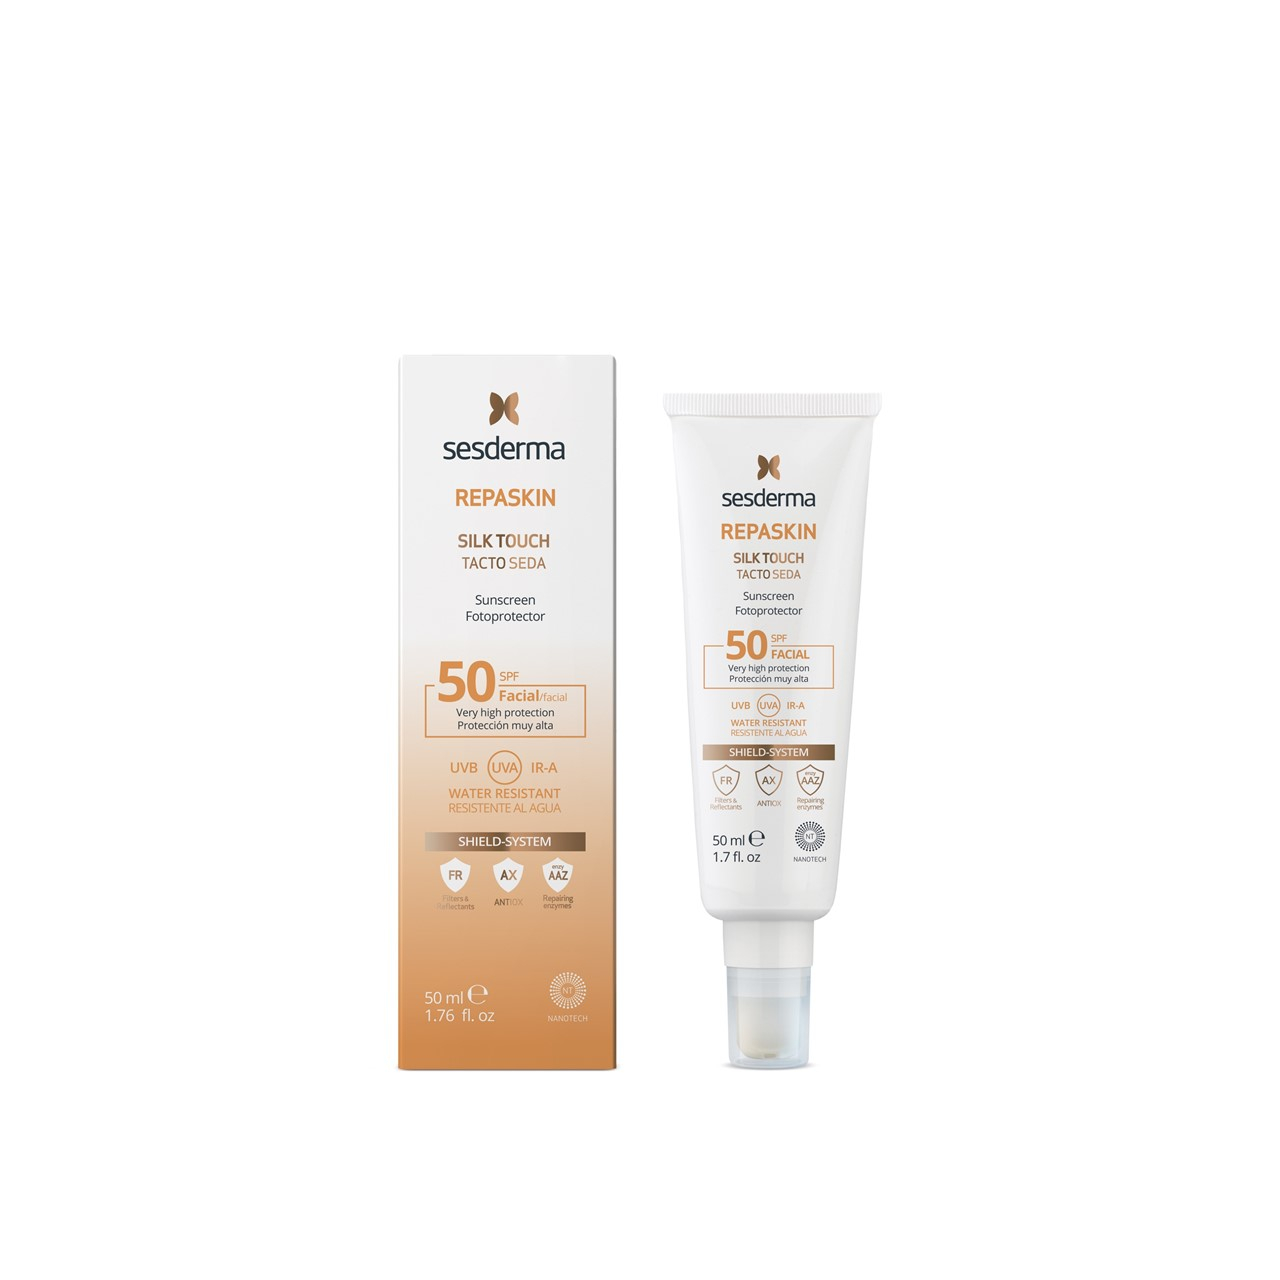 Sesderma Repaskin Silk Touch Facial Sunscreen SPF50 50ml (1.69fl oz)